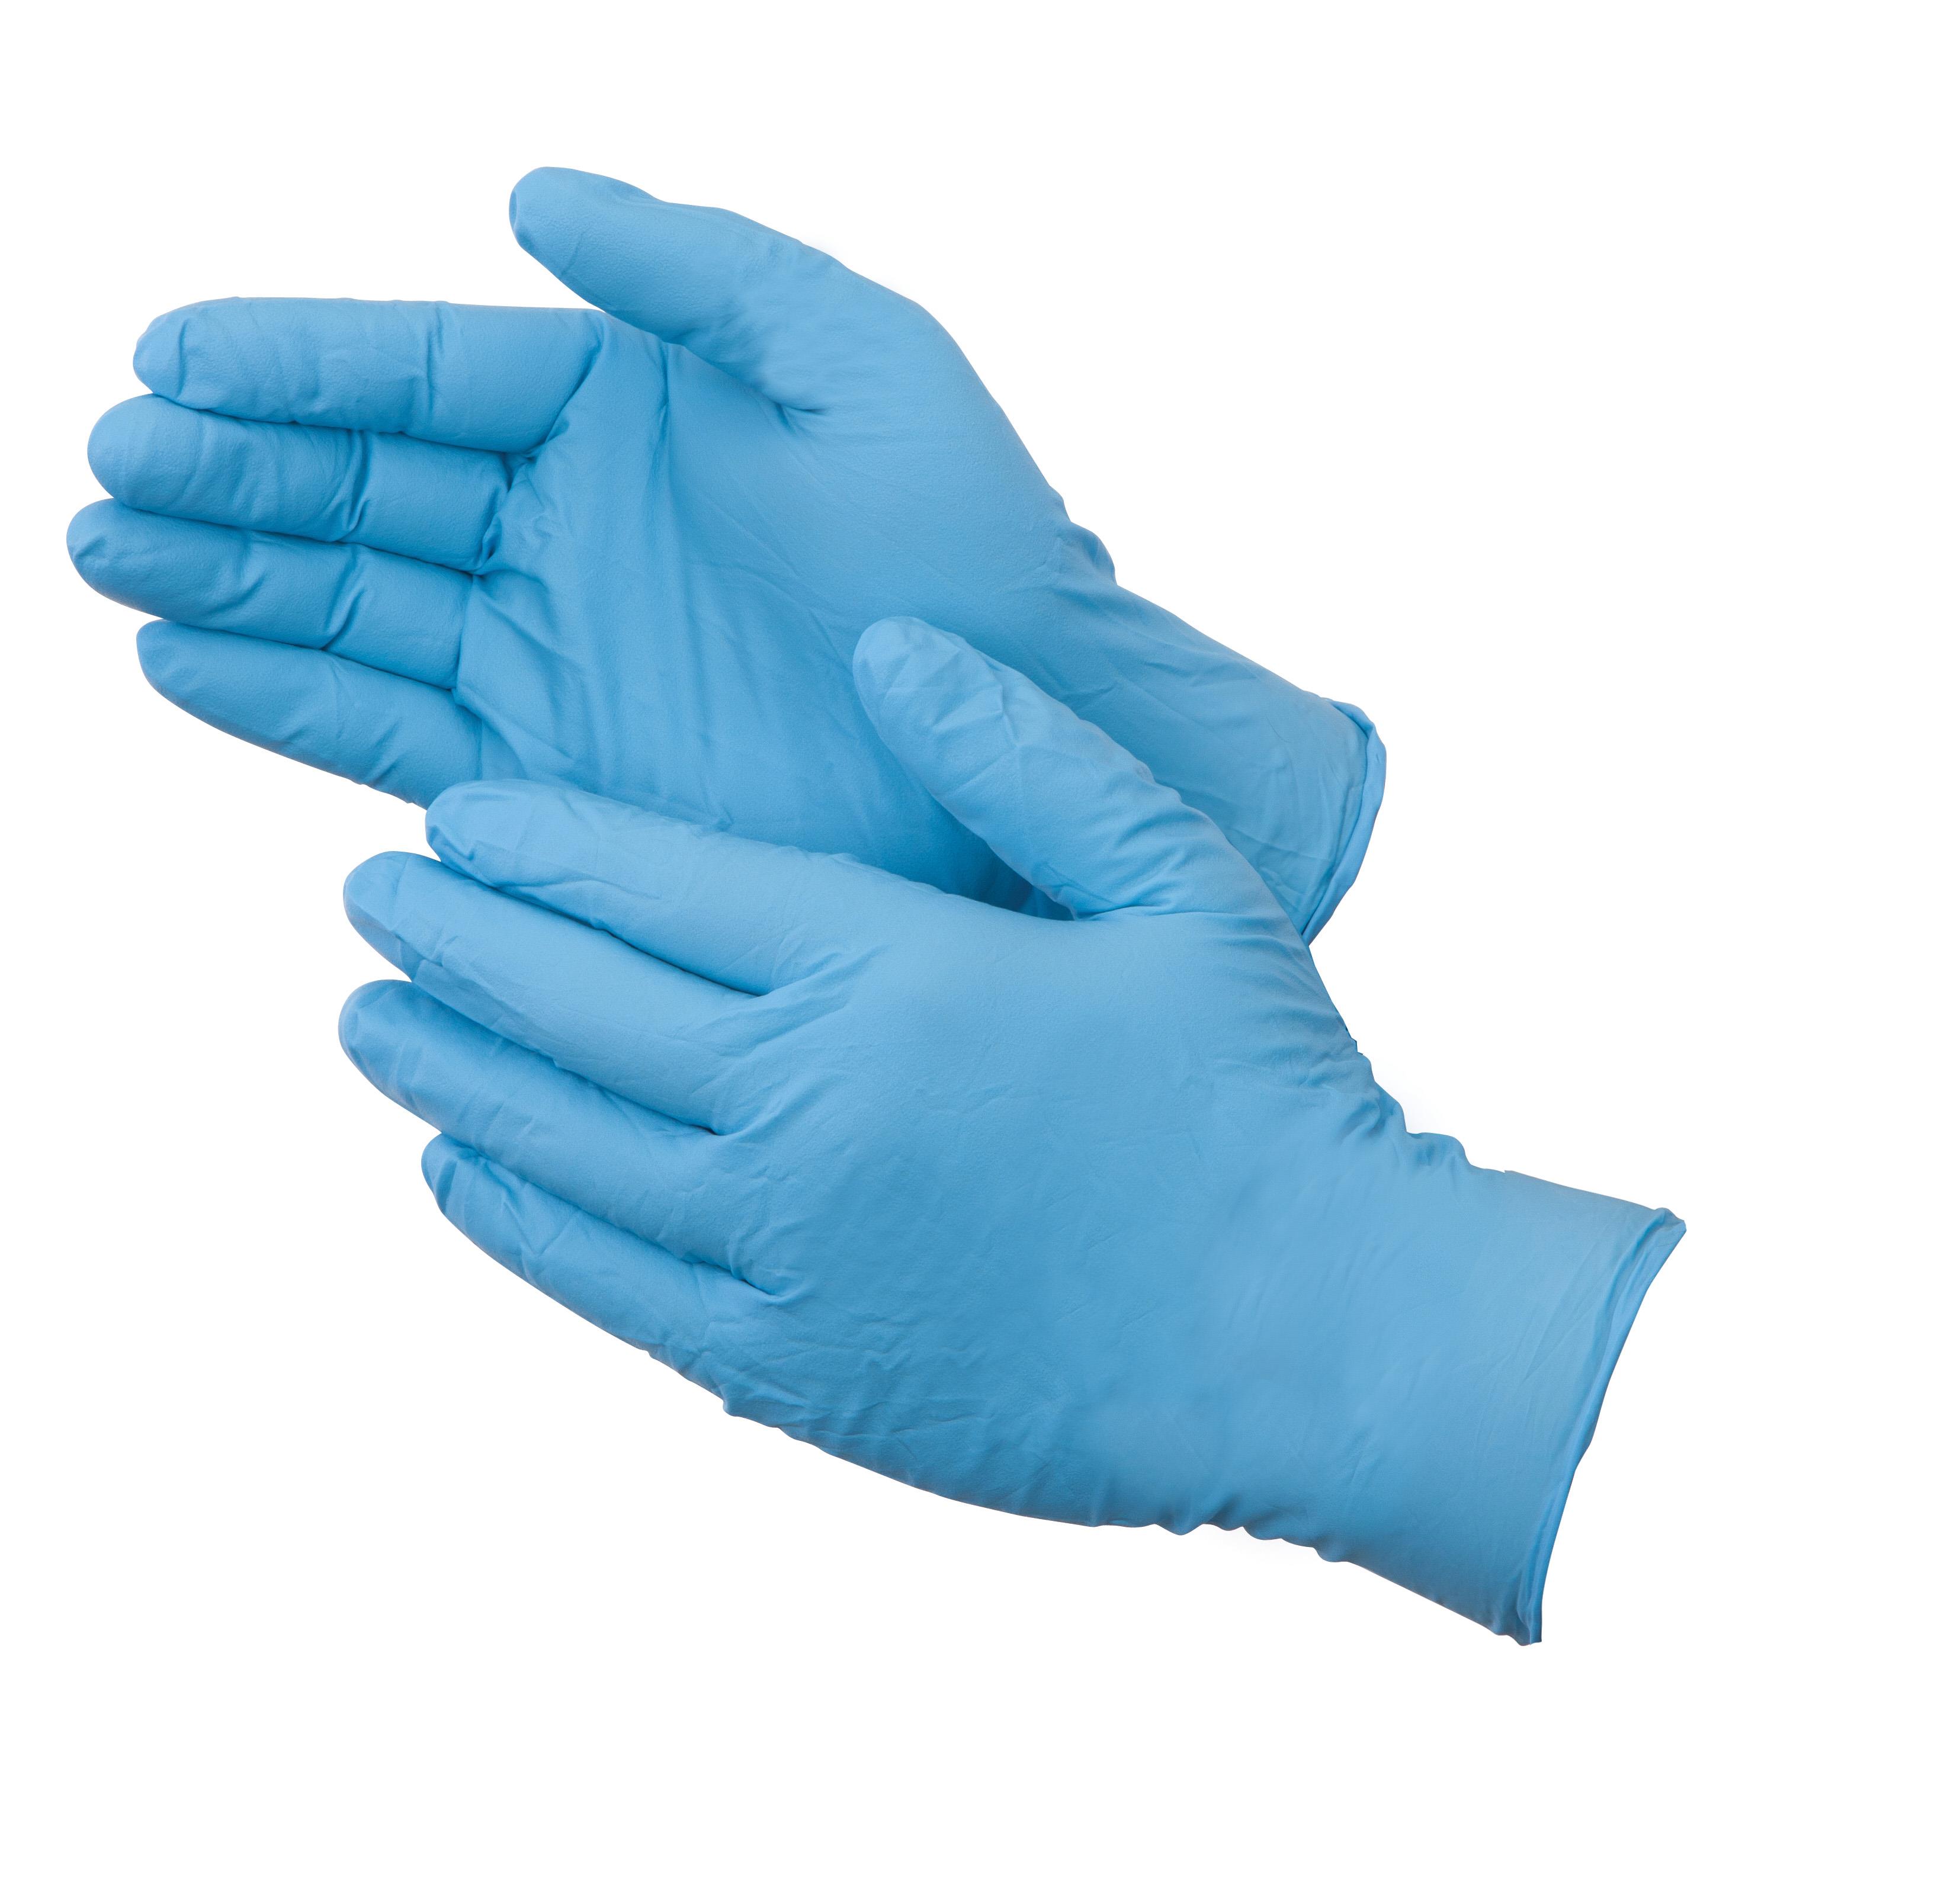 6 MIL POWDER FREE BLUE NITRILE 100/BX - Disposable Gloves